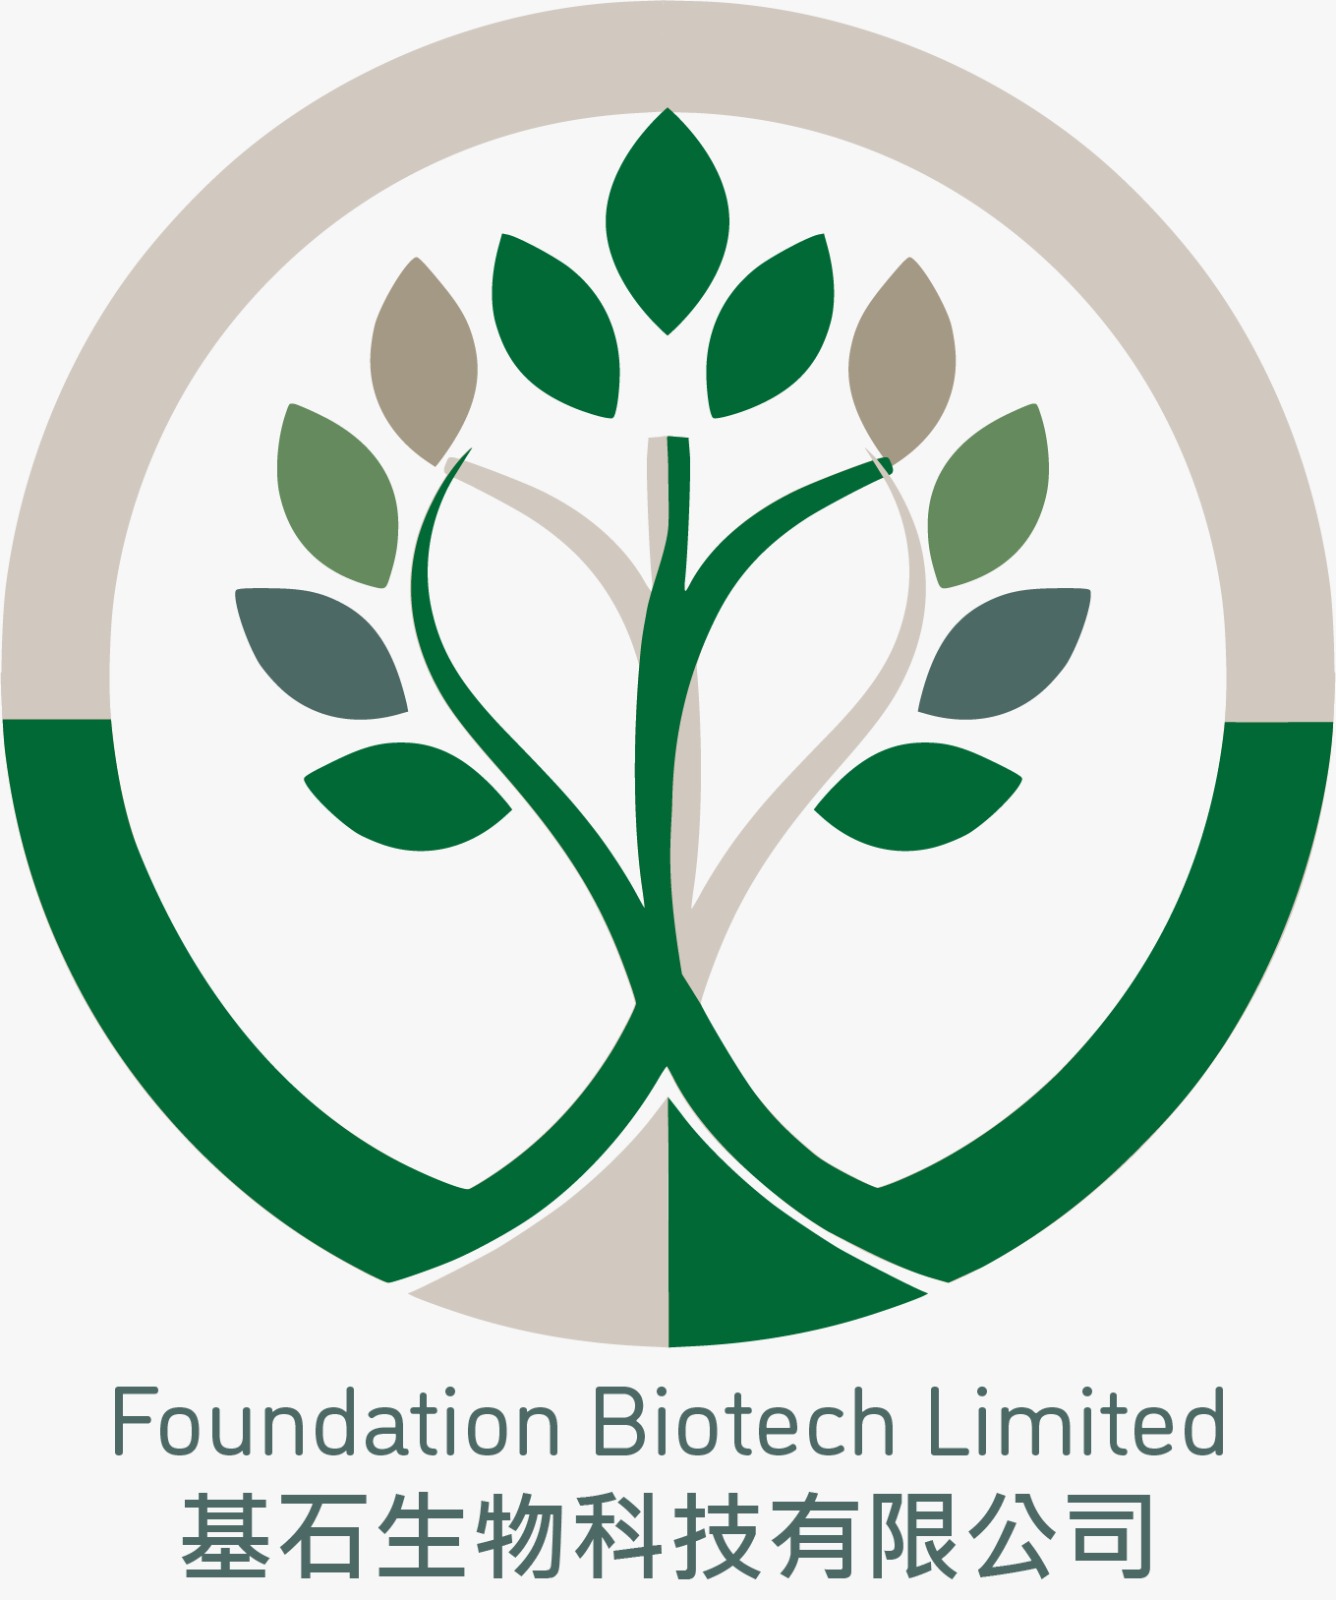 Foundation Biotech Limited